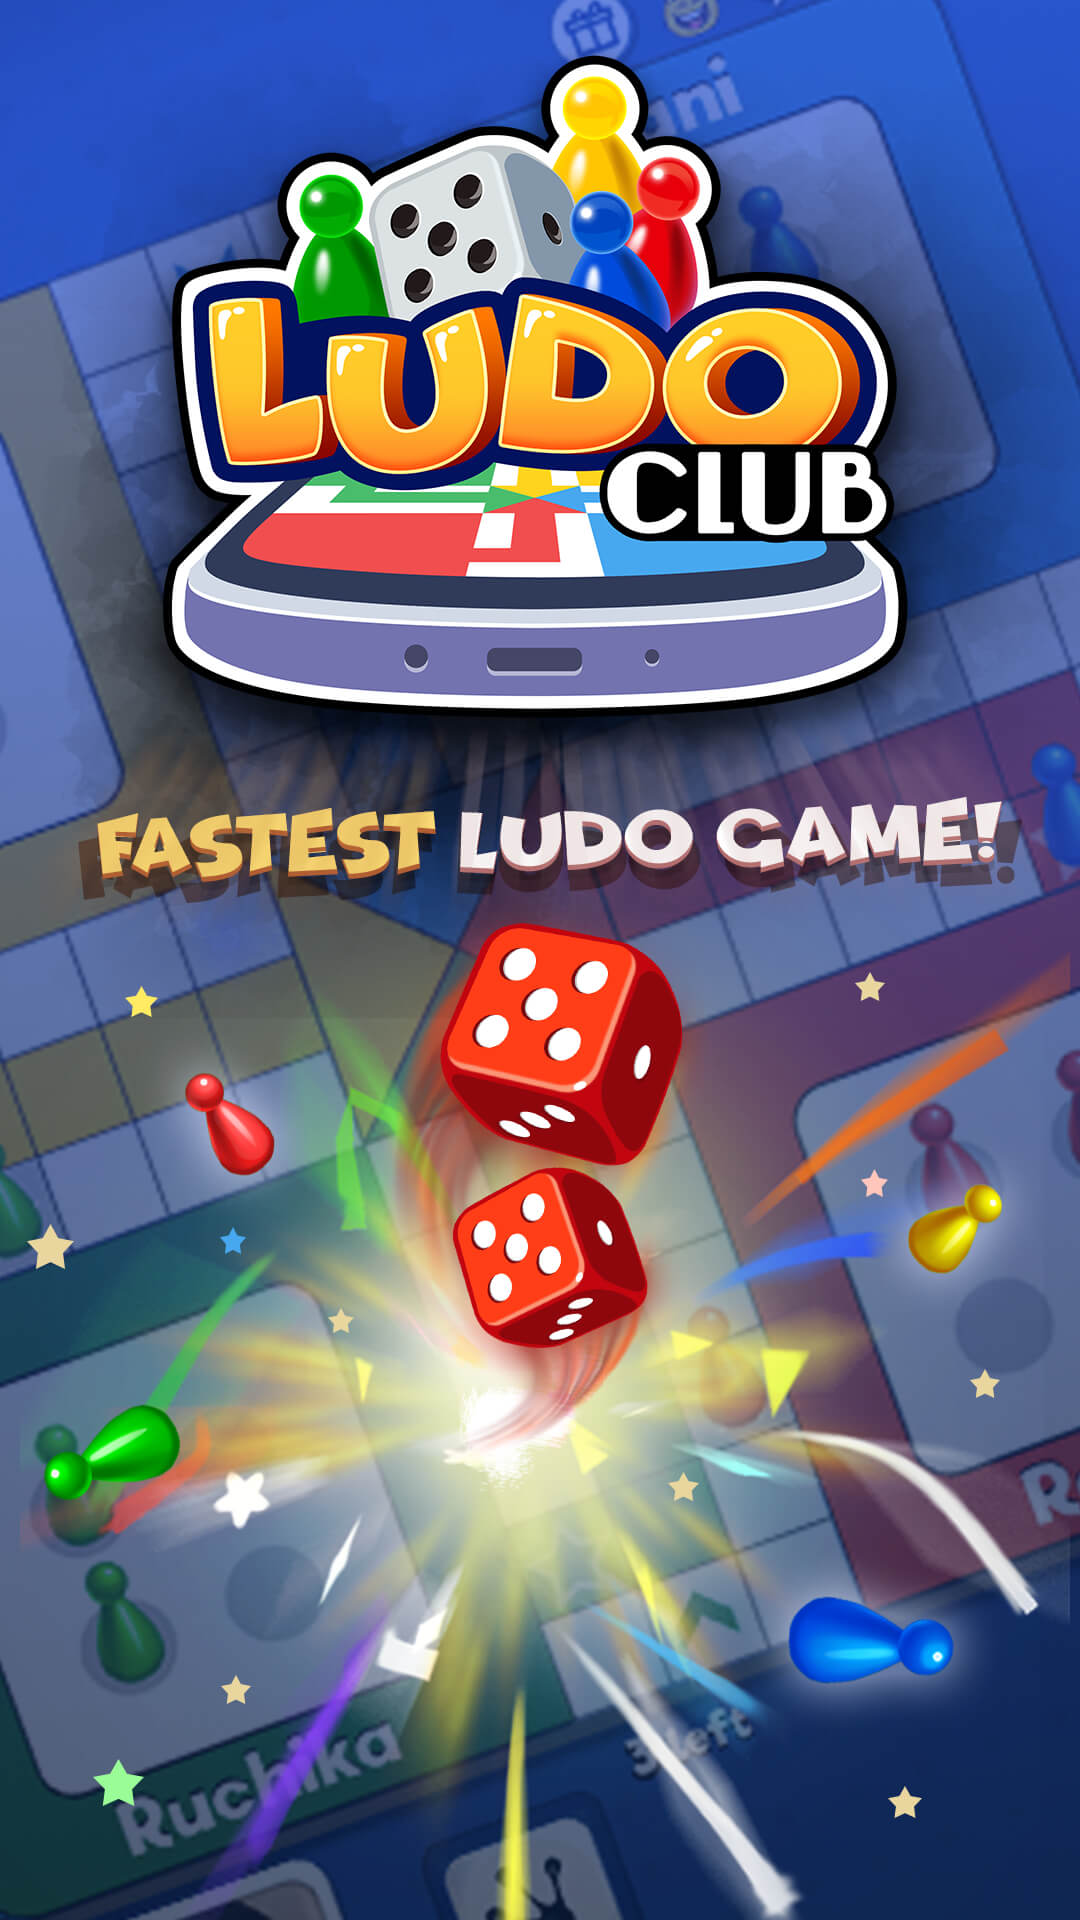 Ludo Club・Fun Dice Board Game by Moonfrog